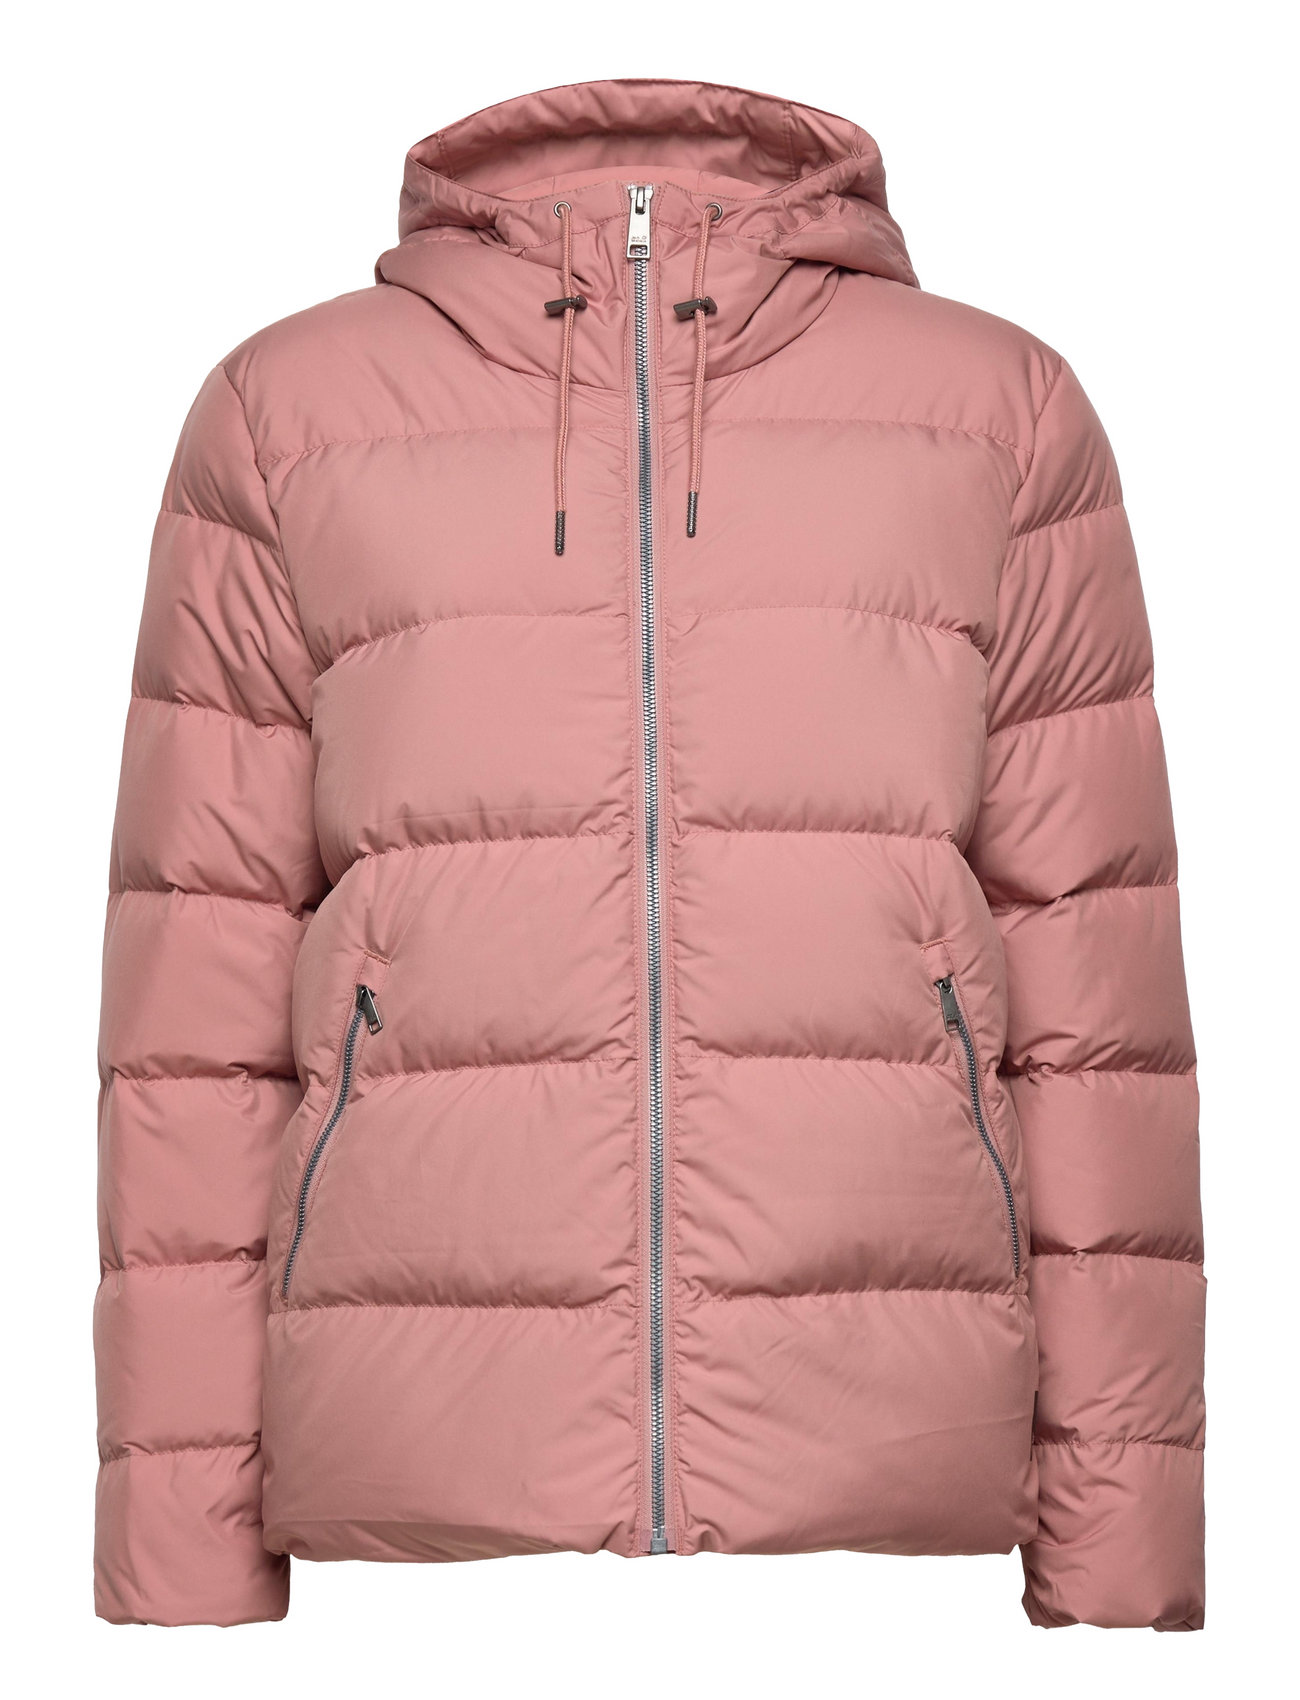 Jack Wolfskin Frozen Palace Jacket W – jackets & coats – shop at Booztlet | Windbreakers